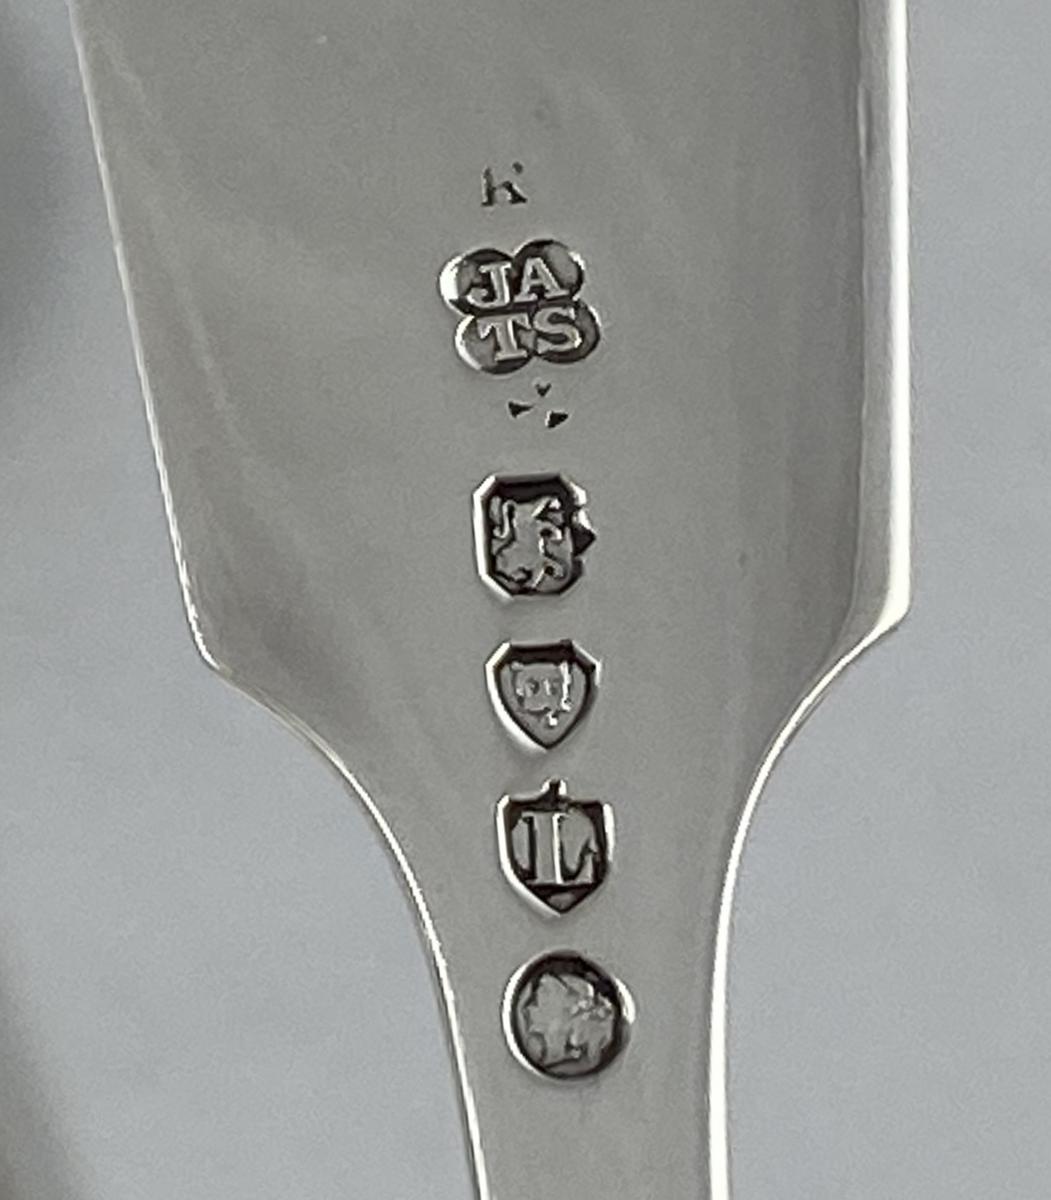 Aldwinckle and Slater silver fiddle pattern flatware cutlery 